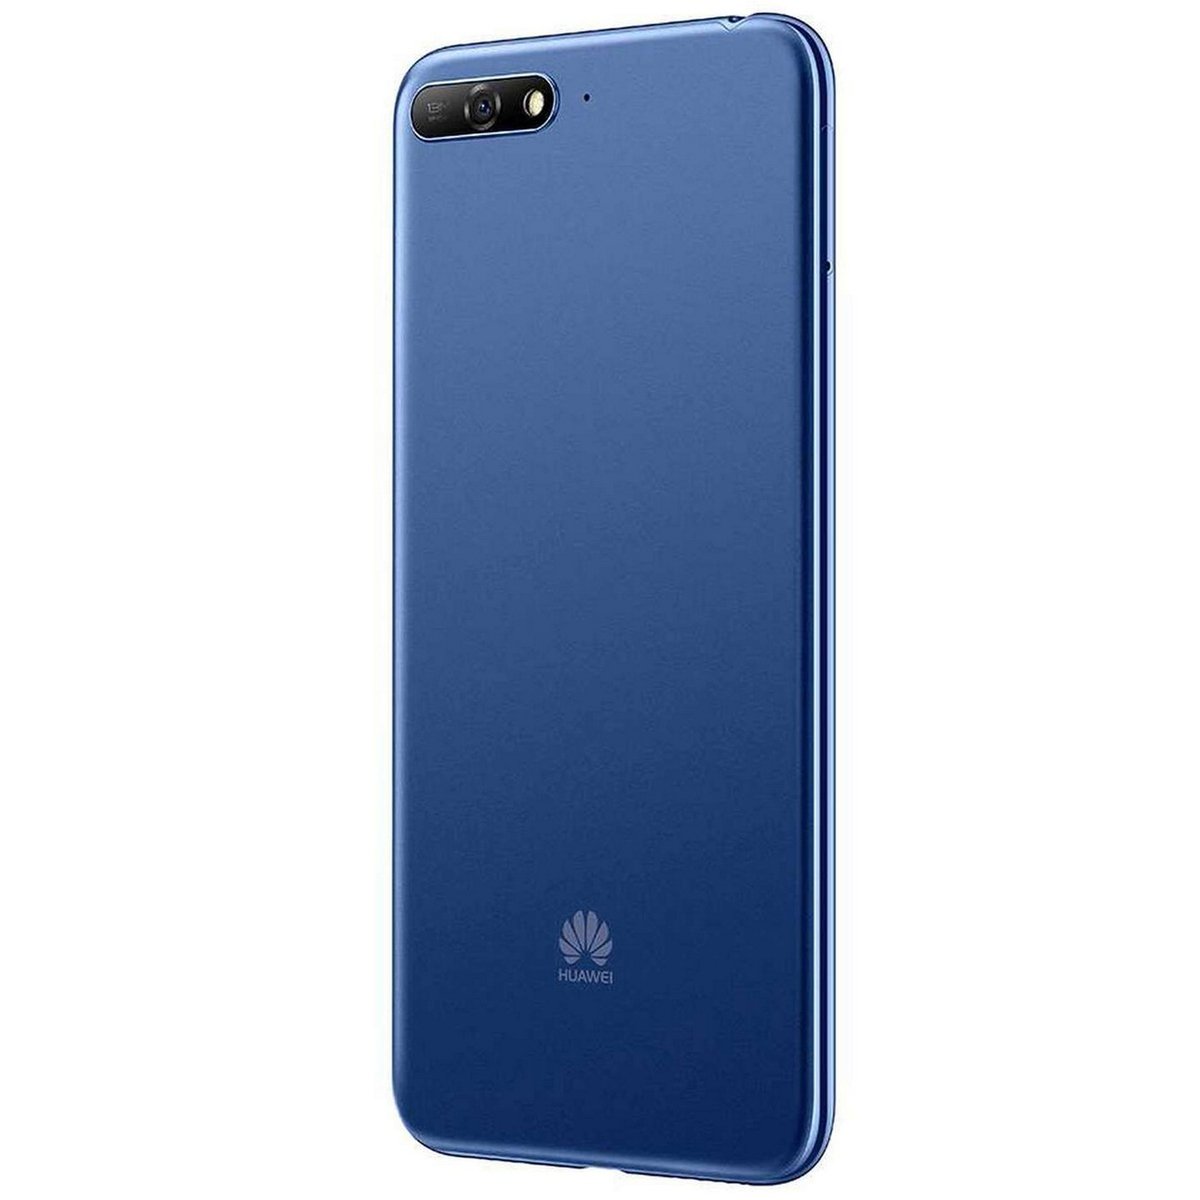 Huawei Y6 Prime 2018 16GB Blue